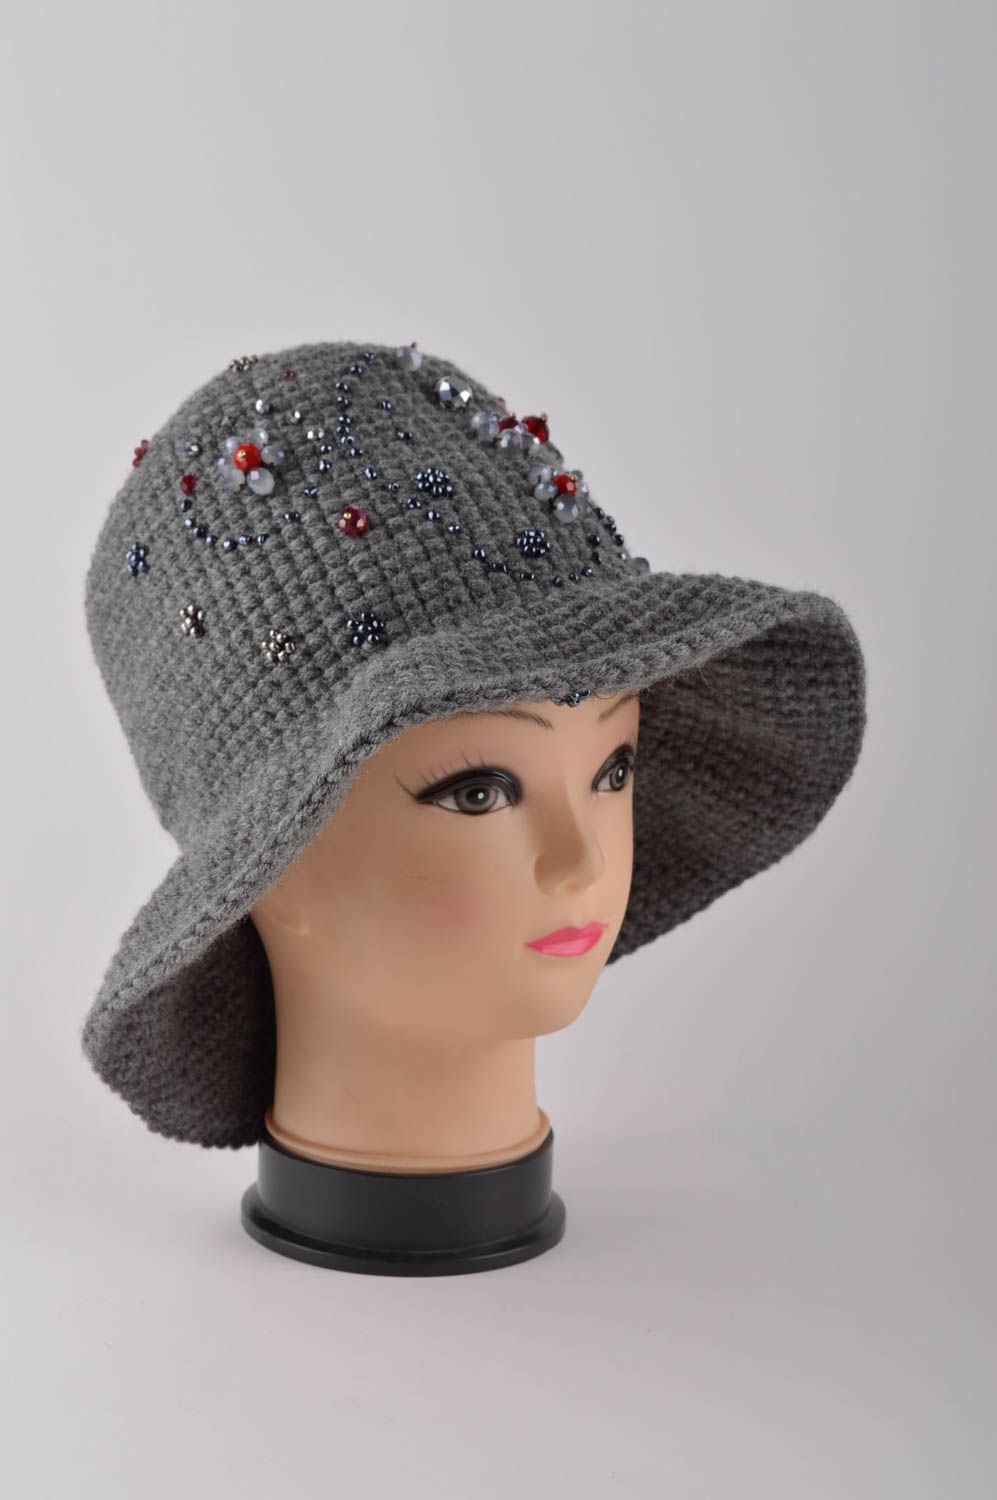 Handmade accessories for women winter hat ladies hat crochet hat gifts for women photo 3